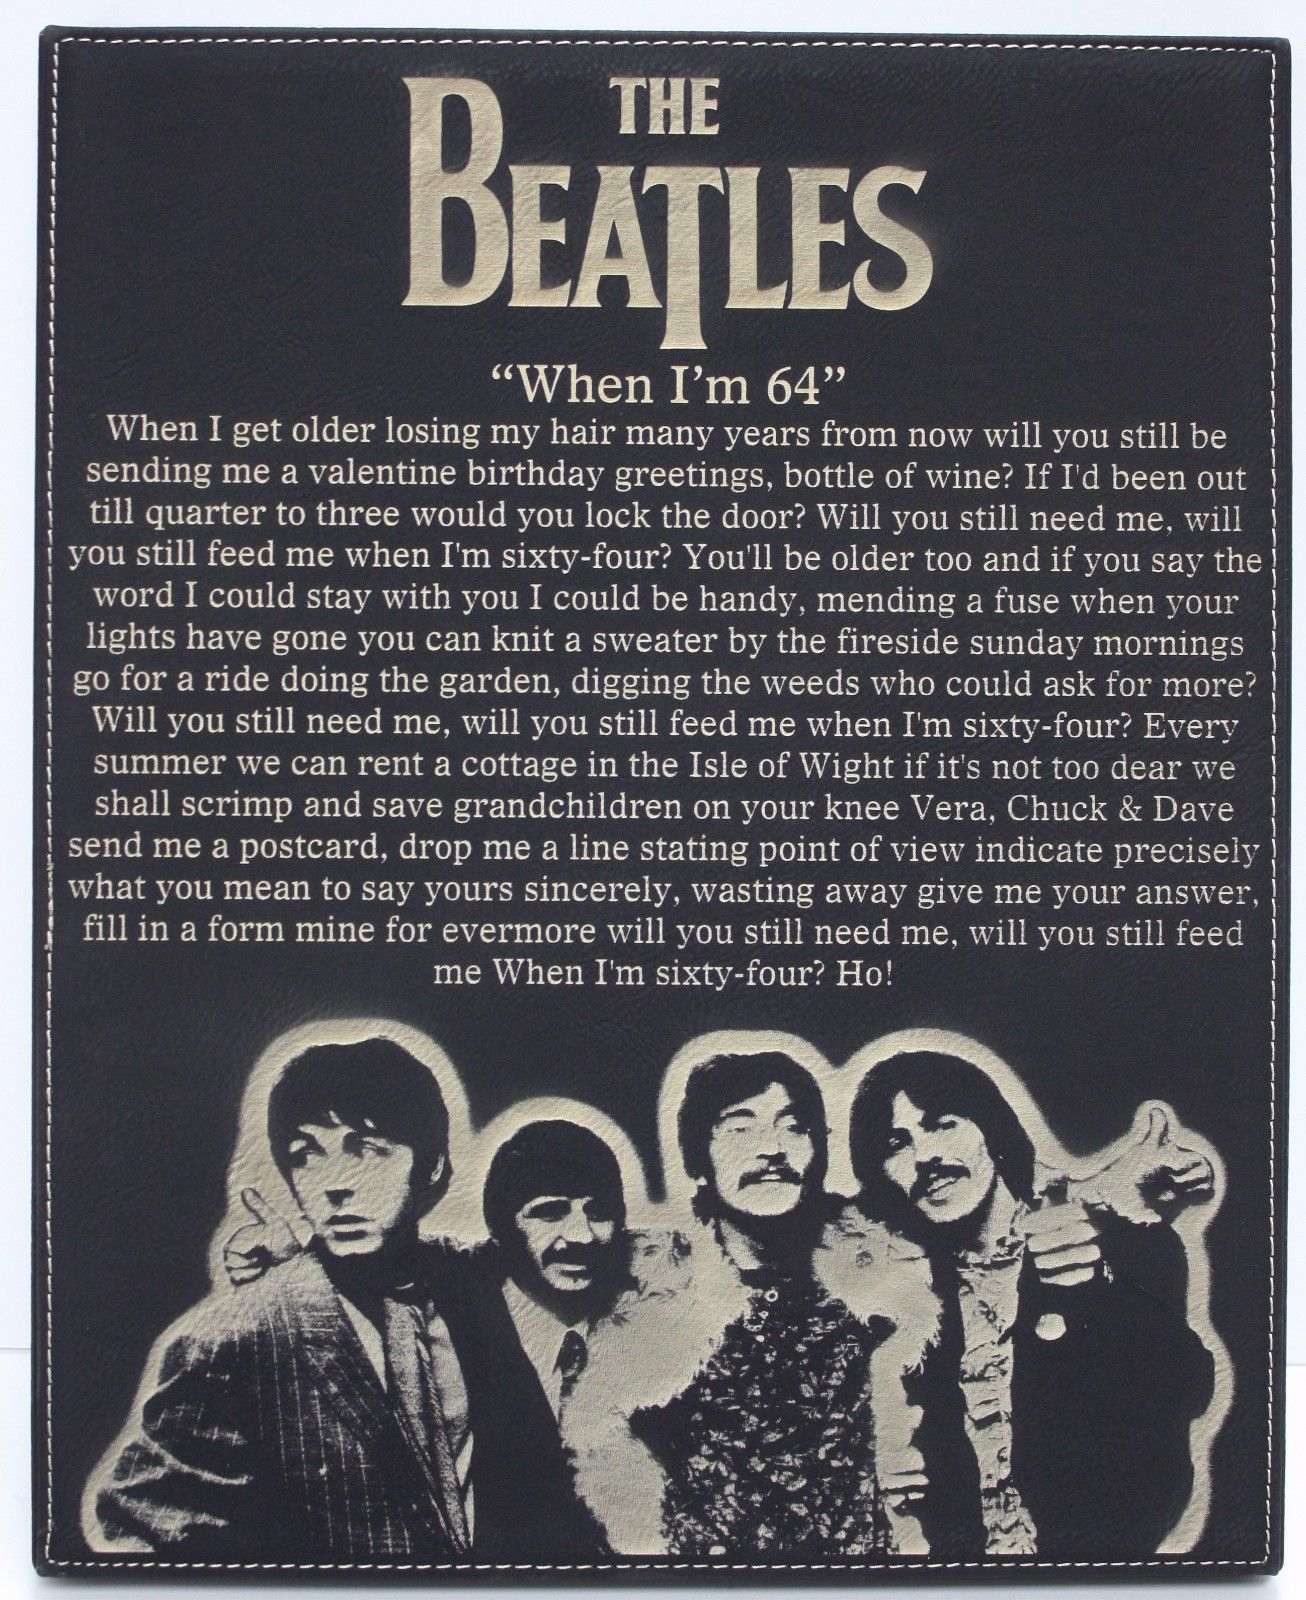 The beatles перевод песен. Битлз 64. The Beatles - when i'm Sixty-four. Когда мне 64 Битлз. Битлз перевод.